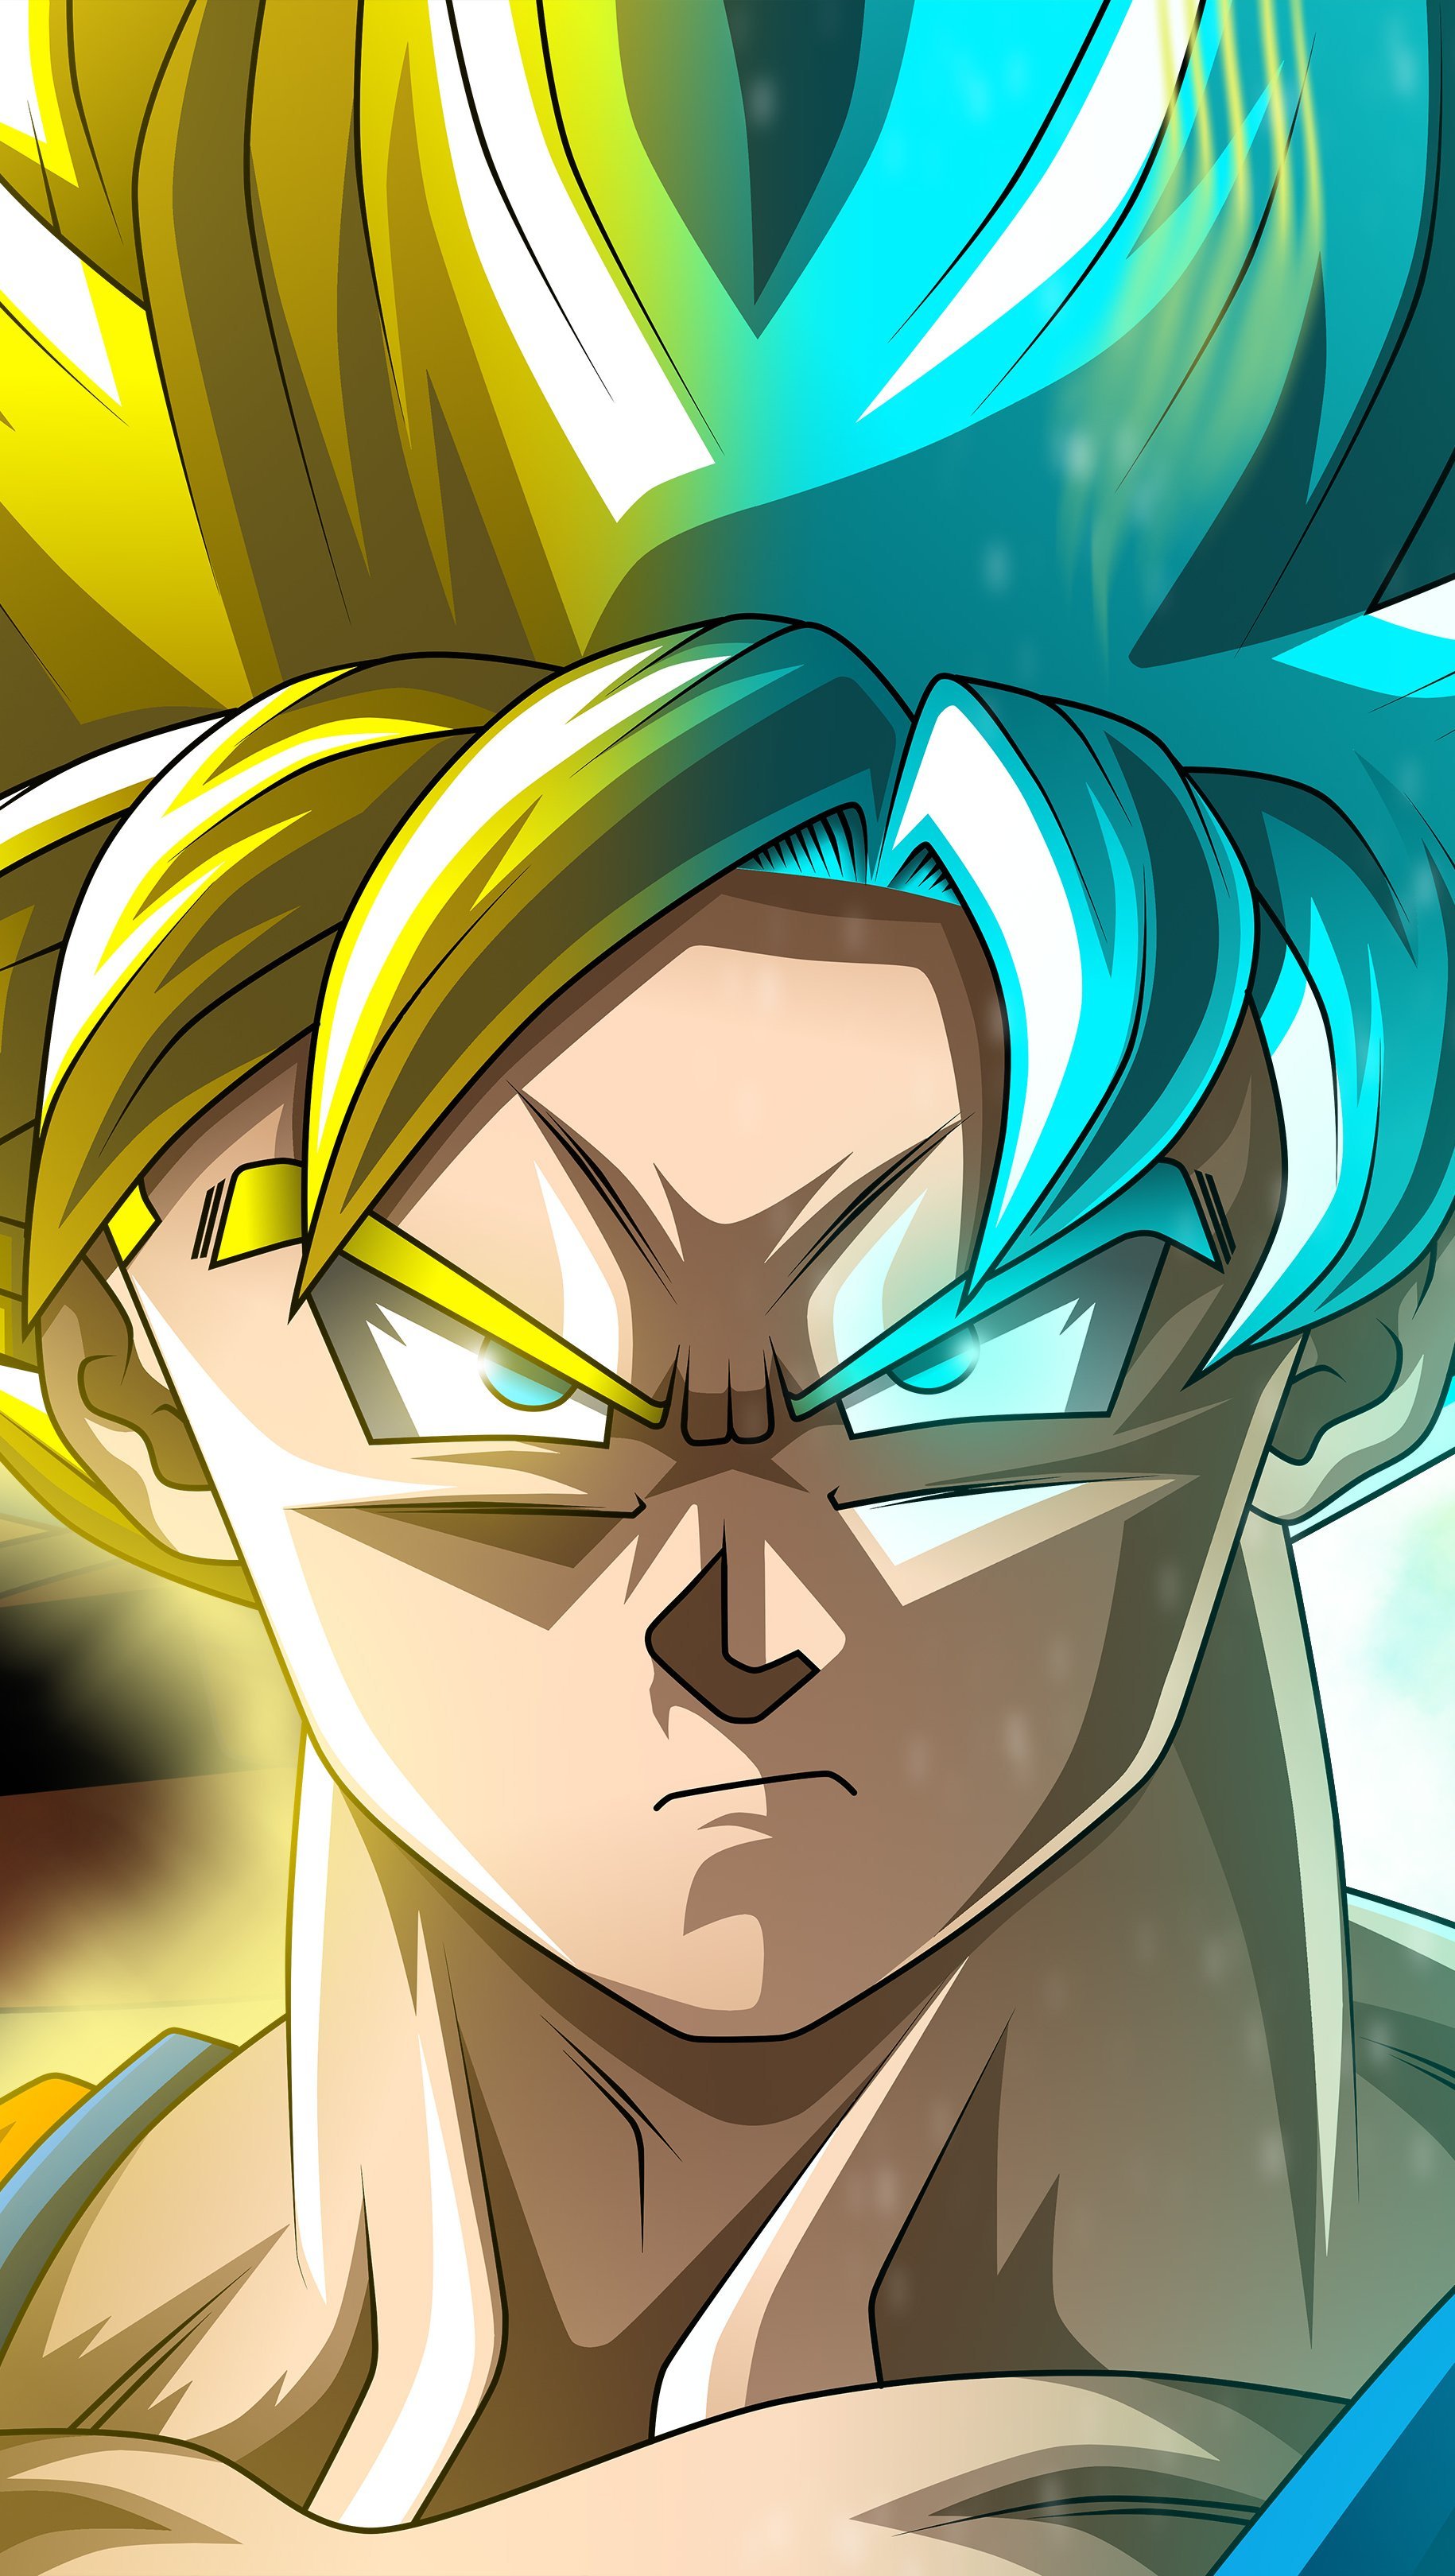 Fondos De Pantalla Dragon Ball Super Goku Anime 7680x4320 Uhd 8k Imagen Mobile Legends